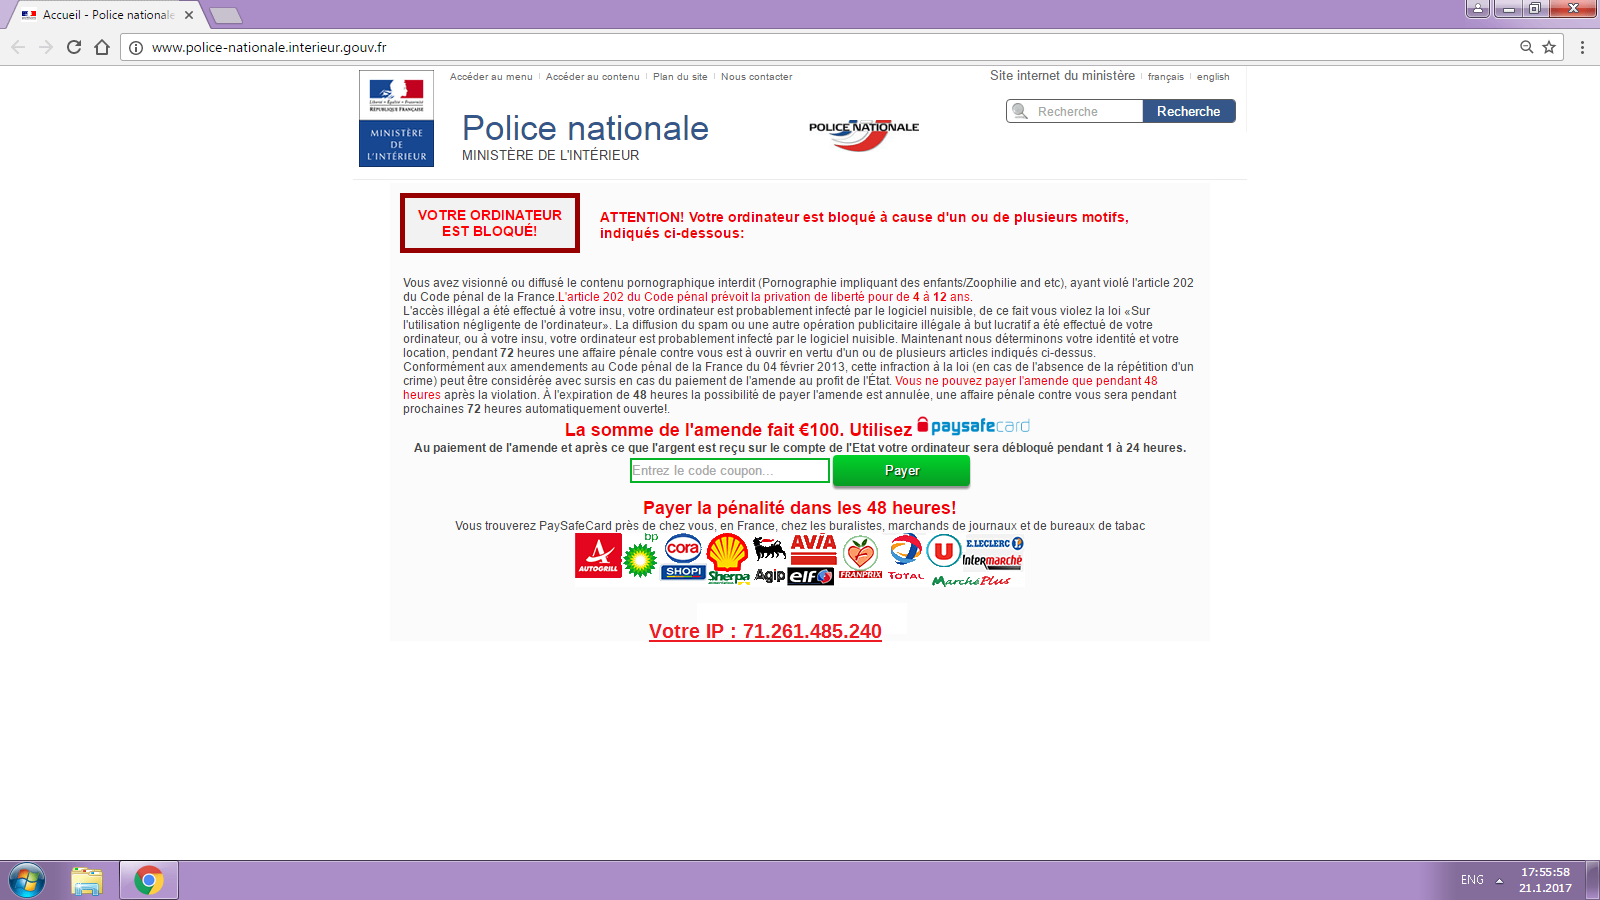 armee ministere sucres paysafecard gilbert interieur police porn internet redirection pedo amende 2 100 euros